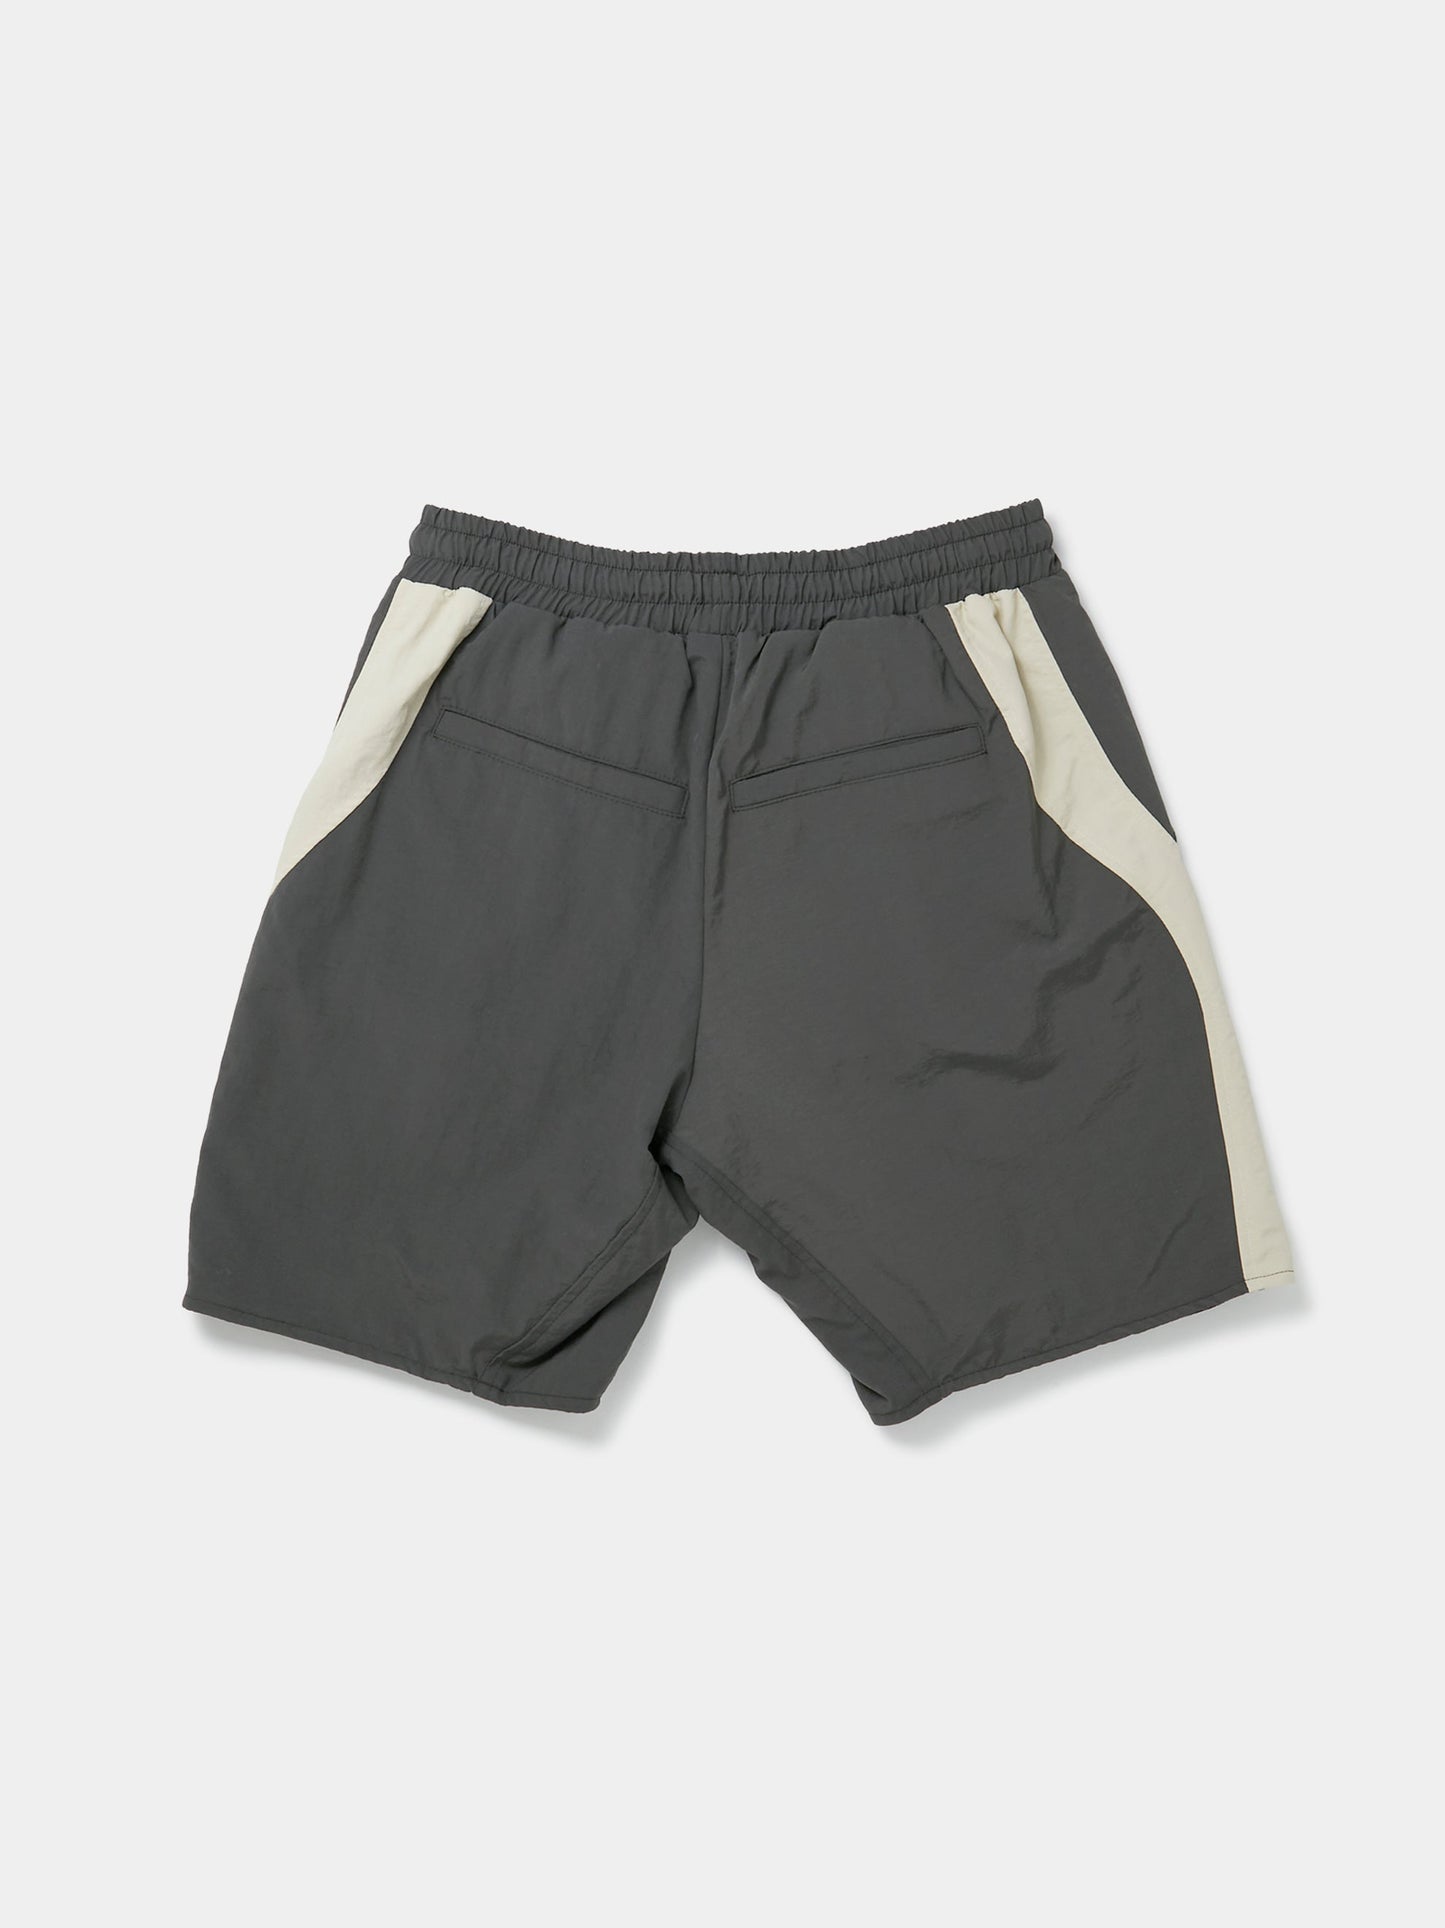 Tech Shorts (Grey/Cream/Charcoal)